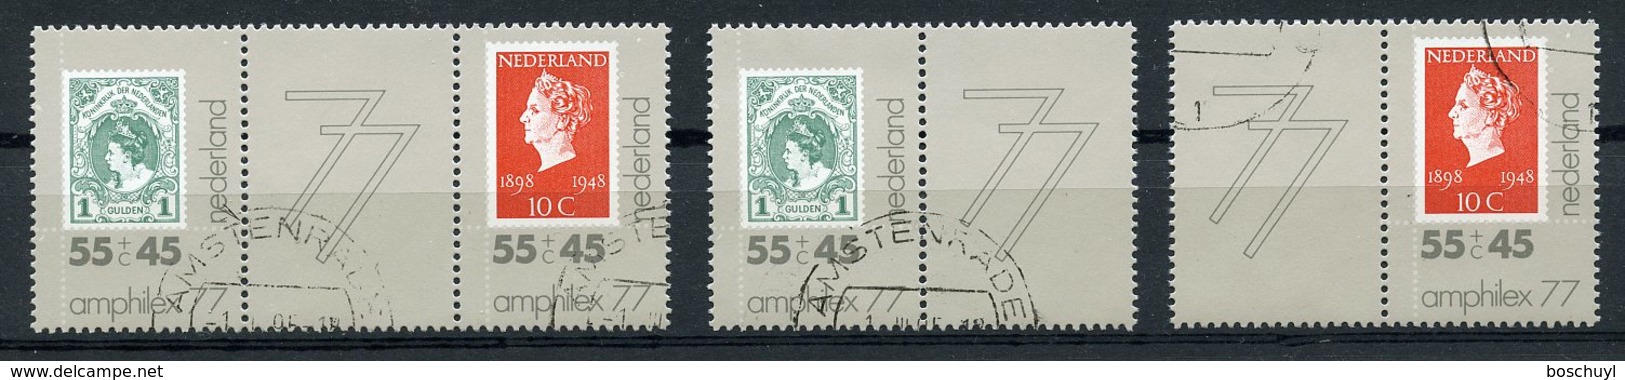 Netherlands, 1977, Amphilex Stamp Exhibition, Combinations From Sheet, Used, Michel 1101, 1104 - Gebraucht